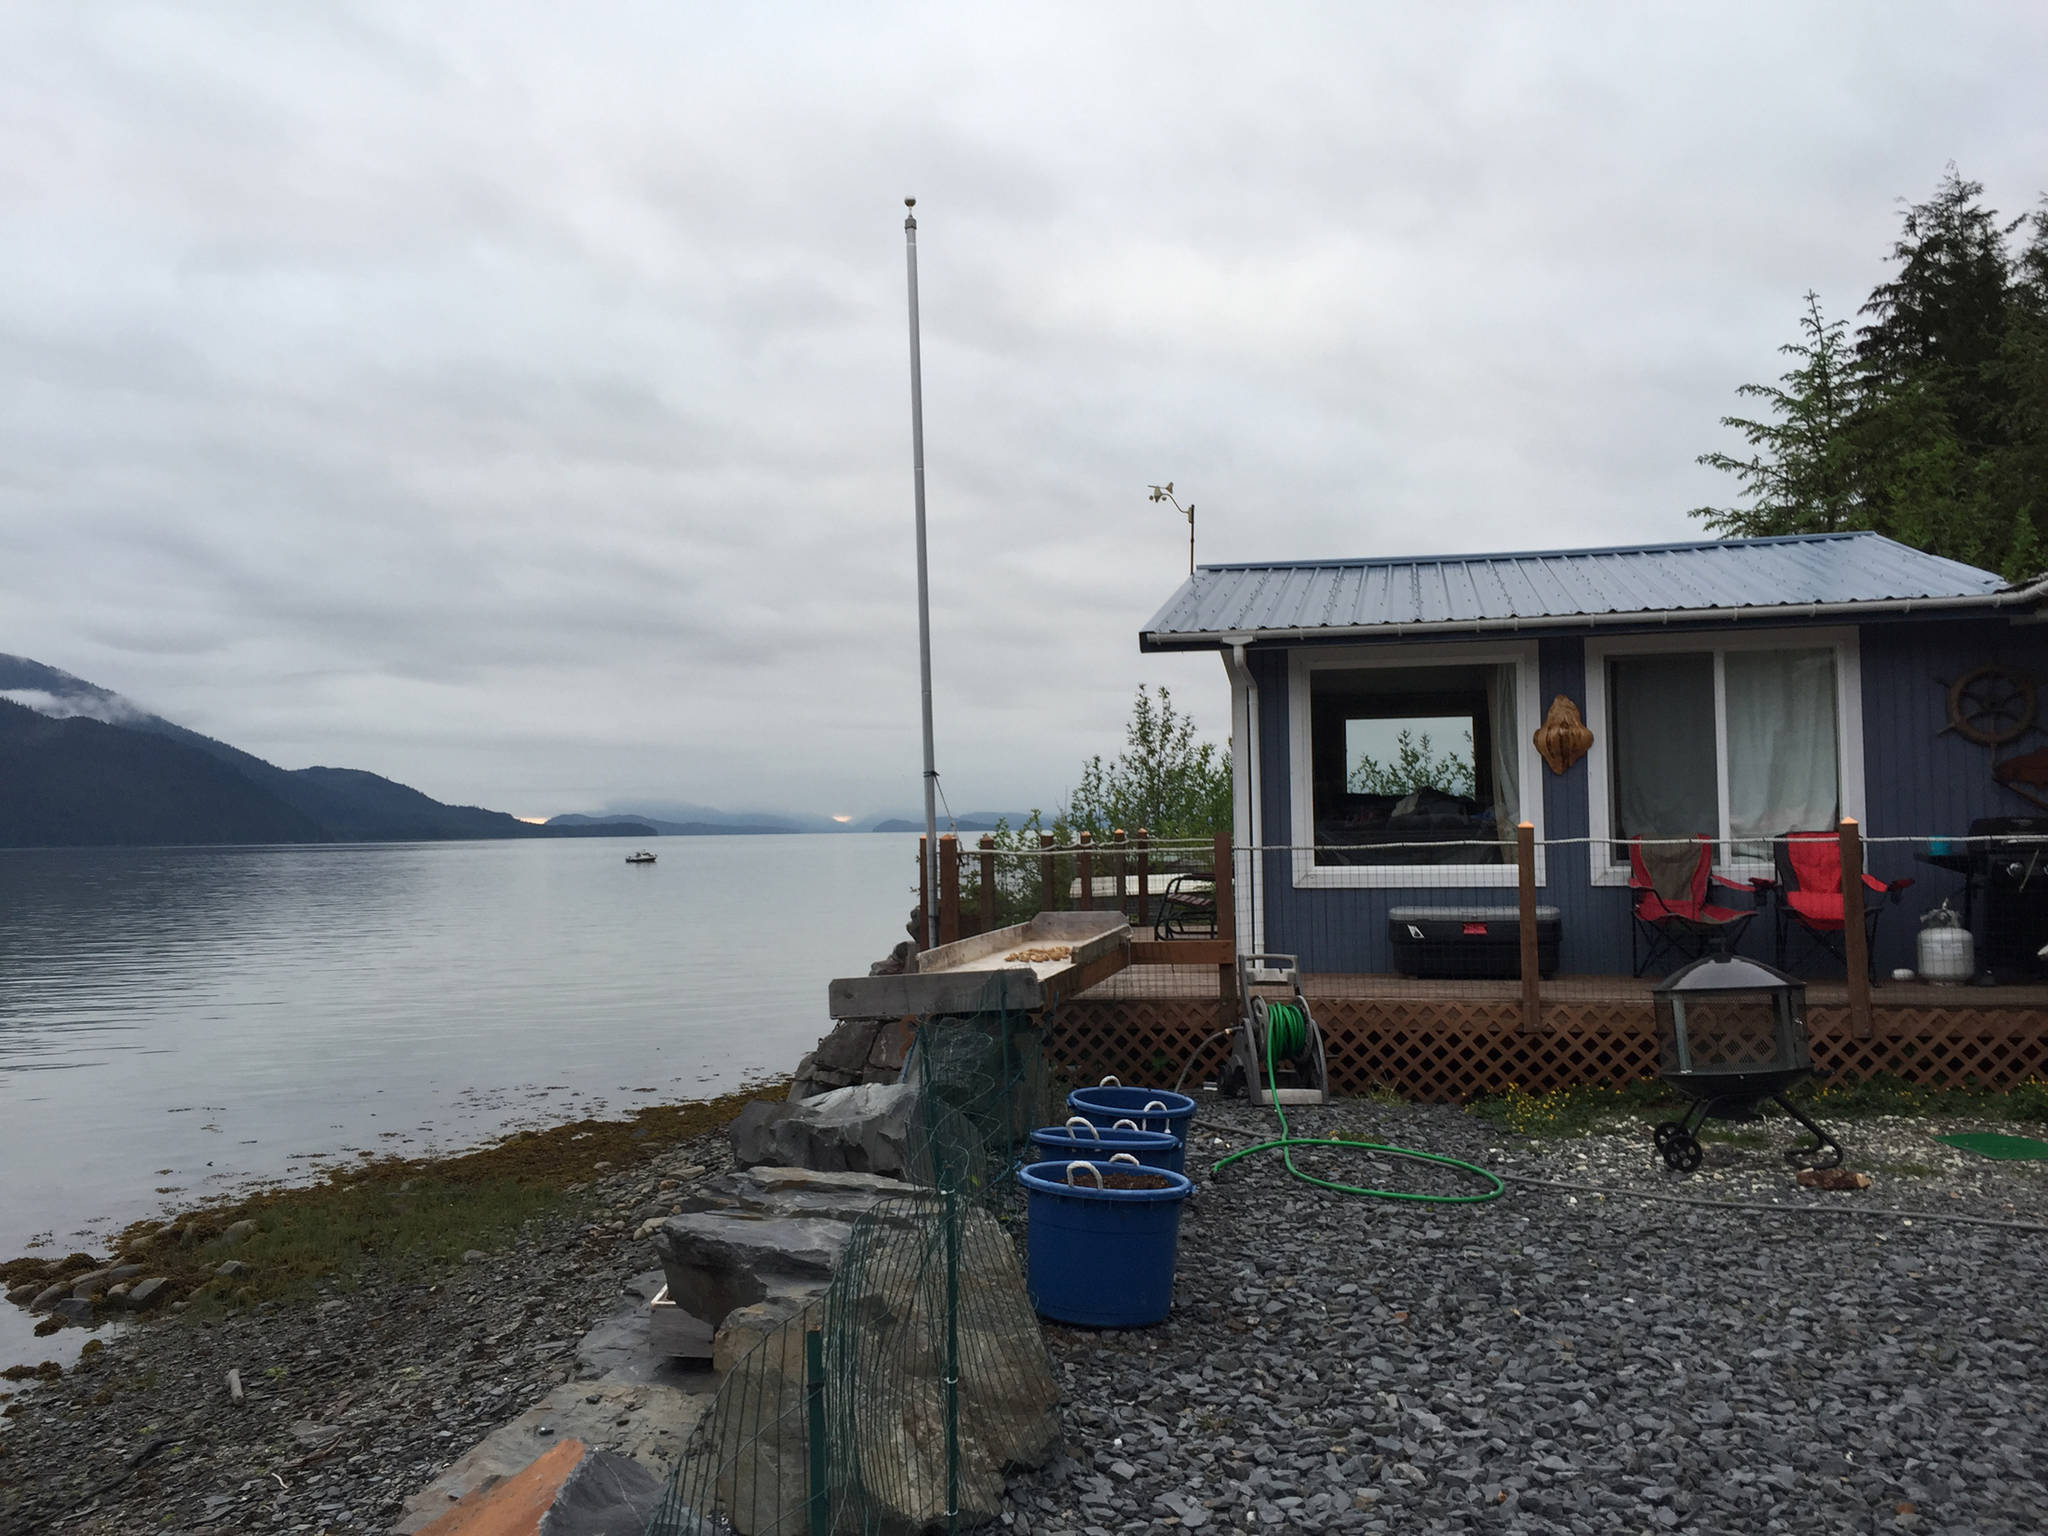 Mickey’s Fish Camp in Wrangell, where Planet Alaska coauthor Vivian Faith Prescott lives and writes. Photo by Vivian Faith Prescott.